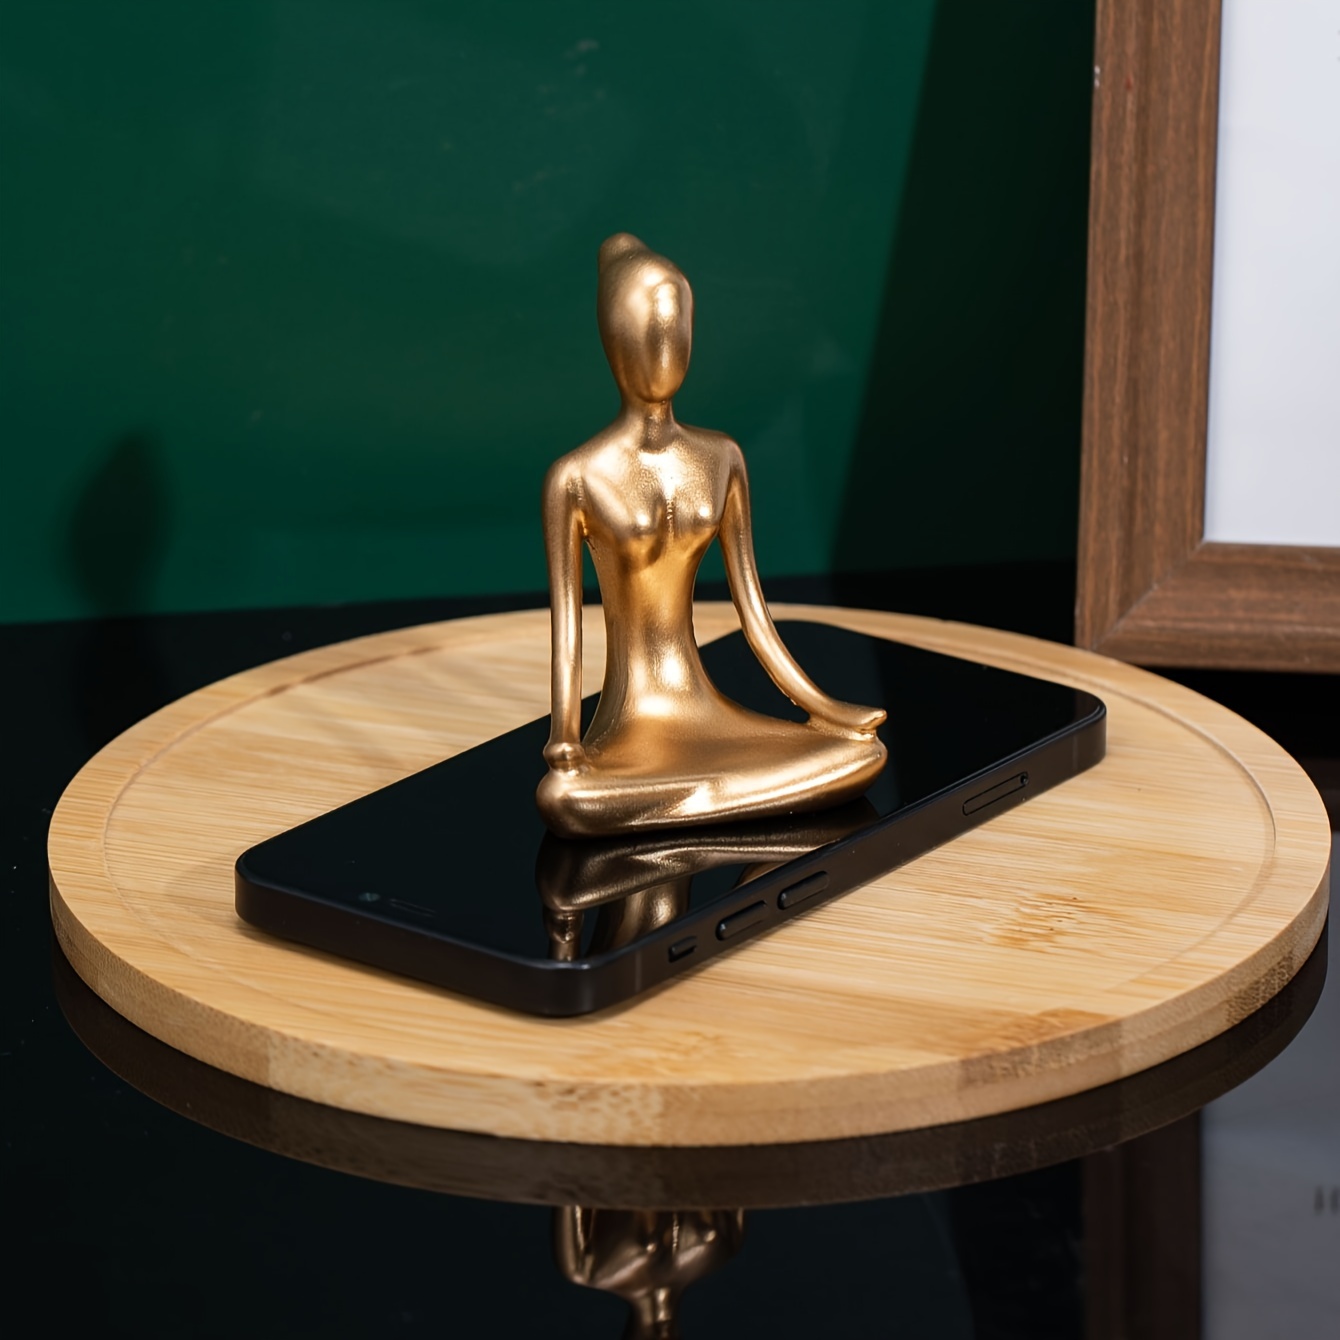 

1pc, Resin Golden Yoga Girl Figurine, Meditation Room Decor, Home Decor, Zen Decor, Shelf Accent, Tabletop Decor, Inspirational Sculpture